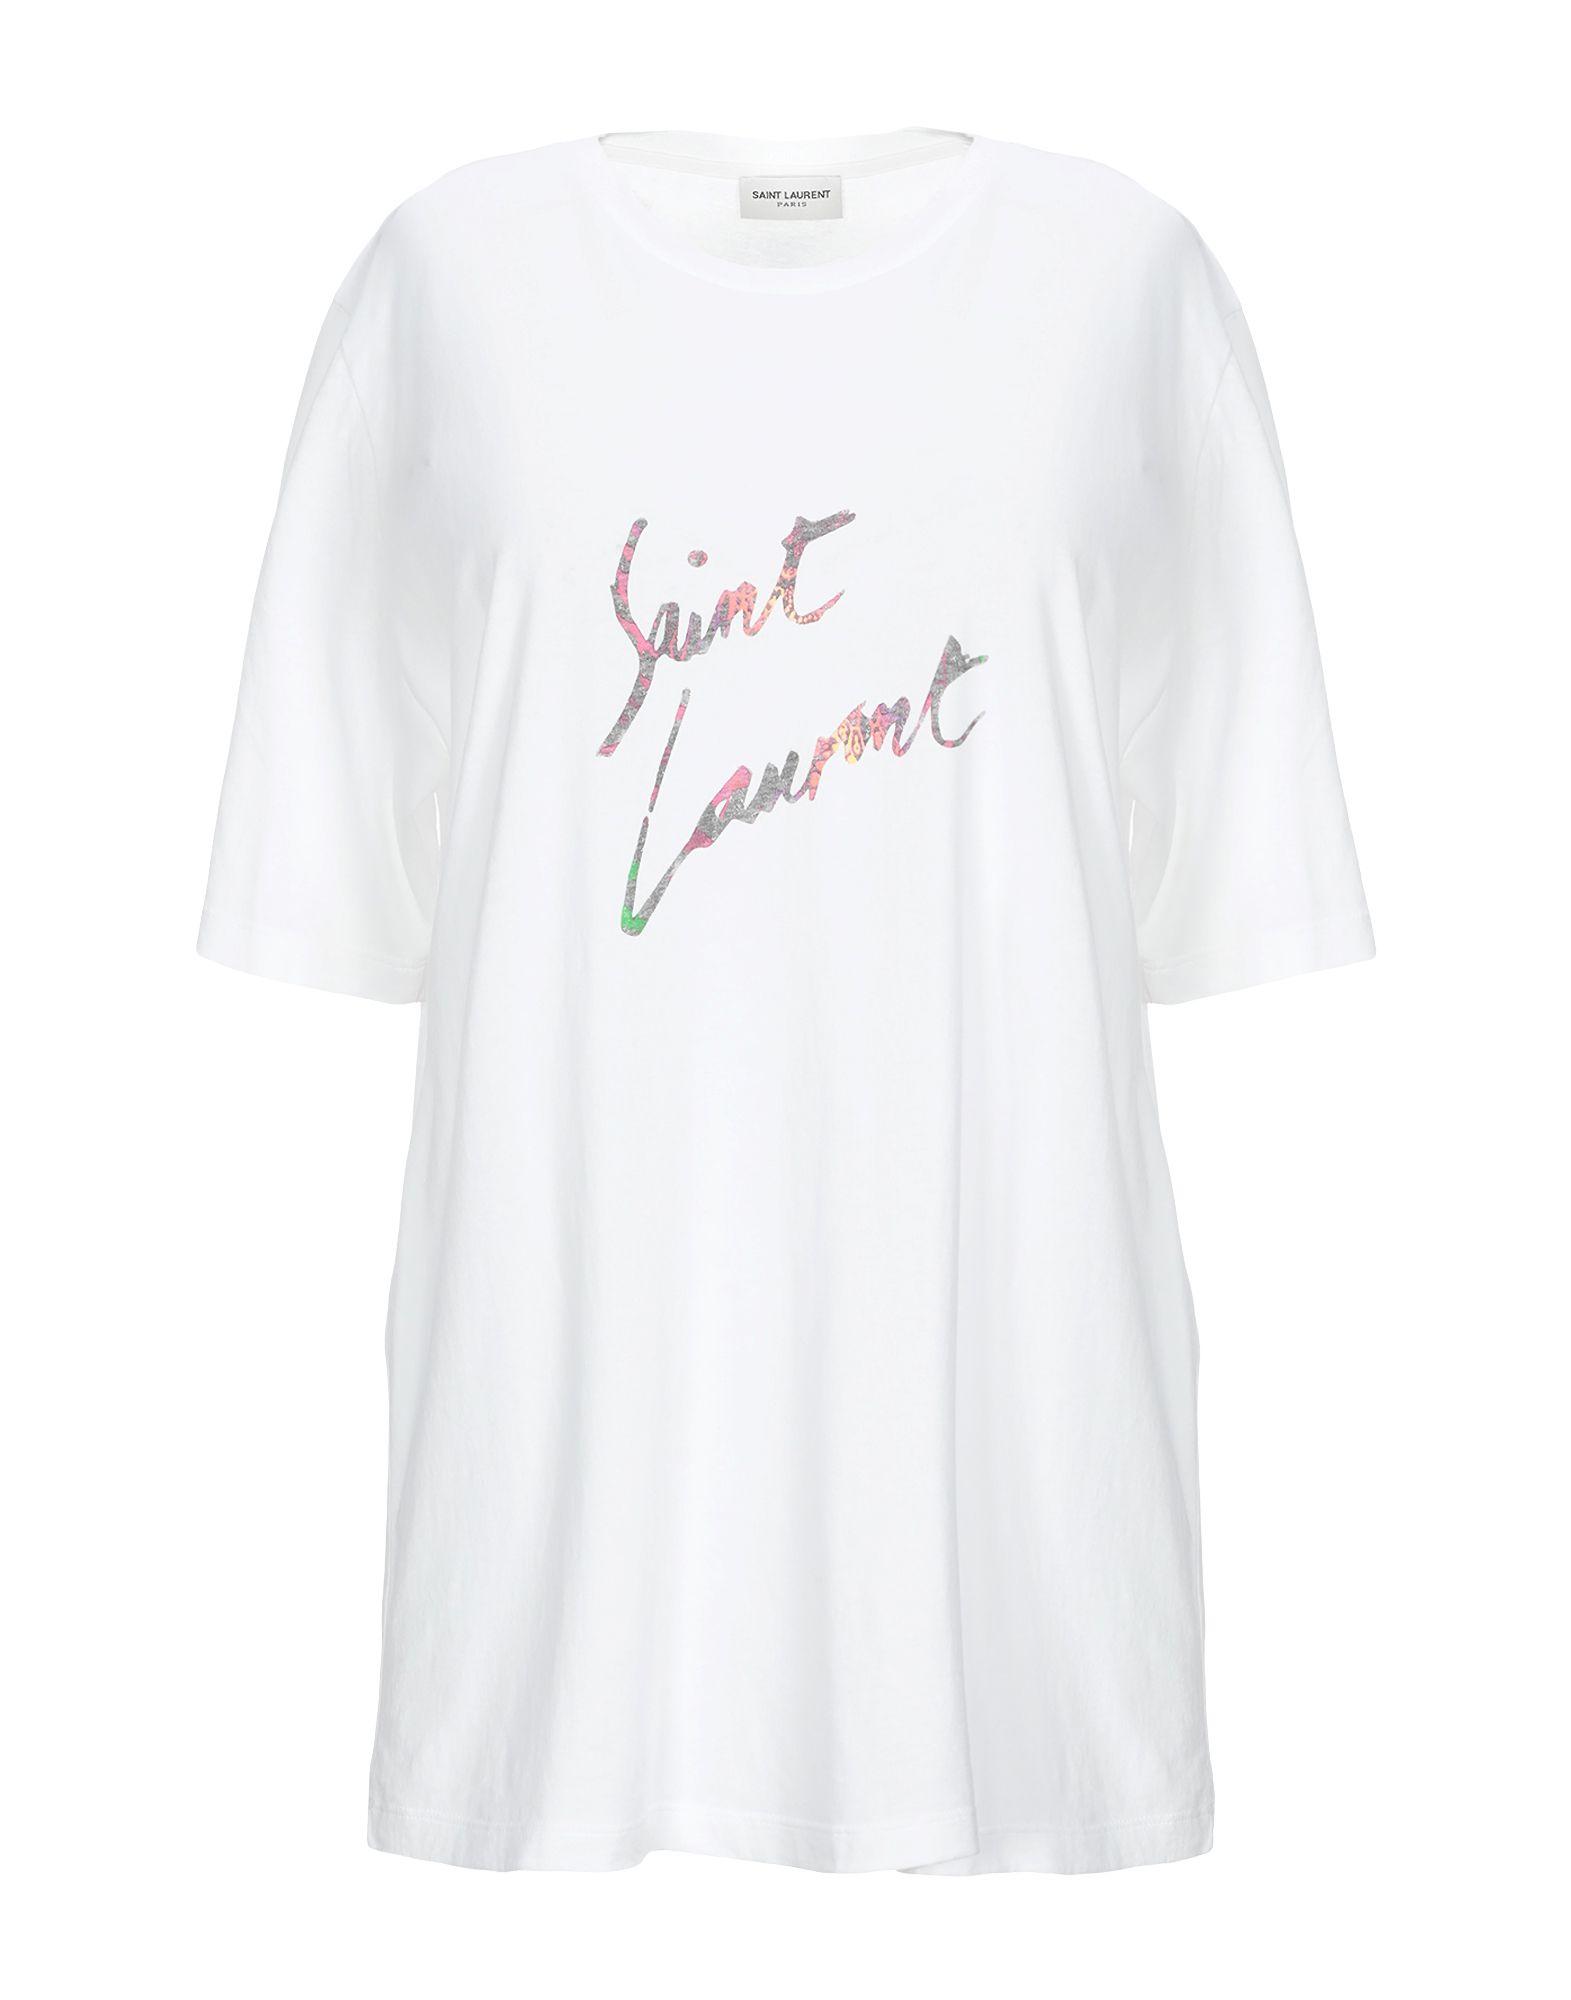 Saint Laurent T-shirt in White - Lyst